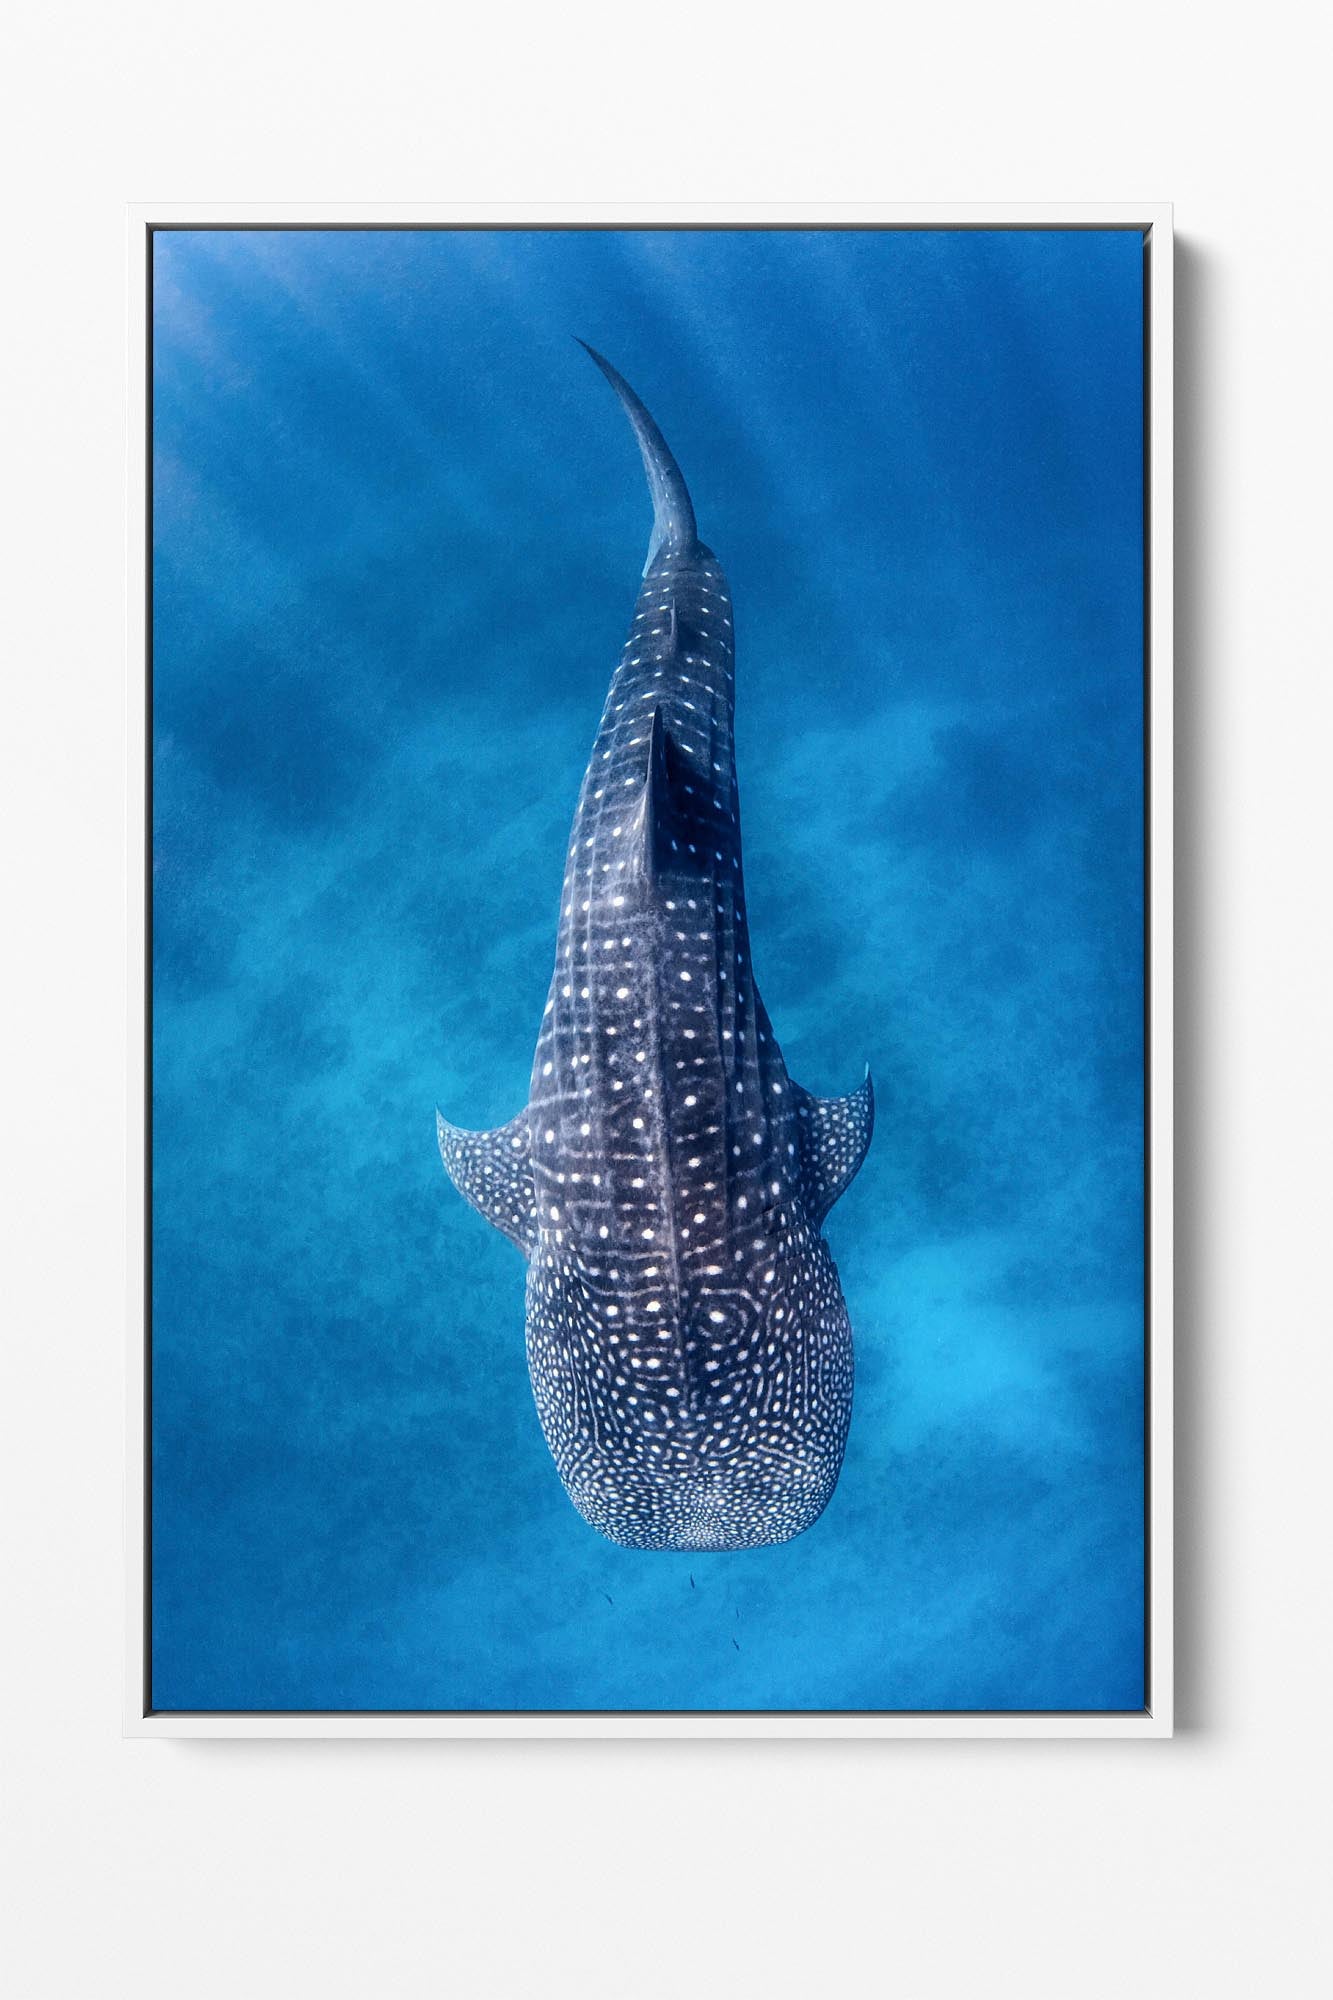 Whale Shark Clarity Ningaloo Reef